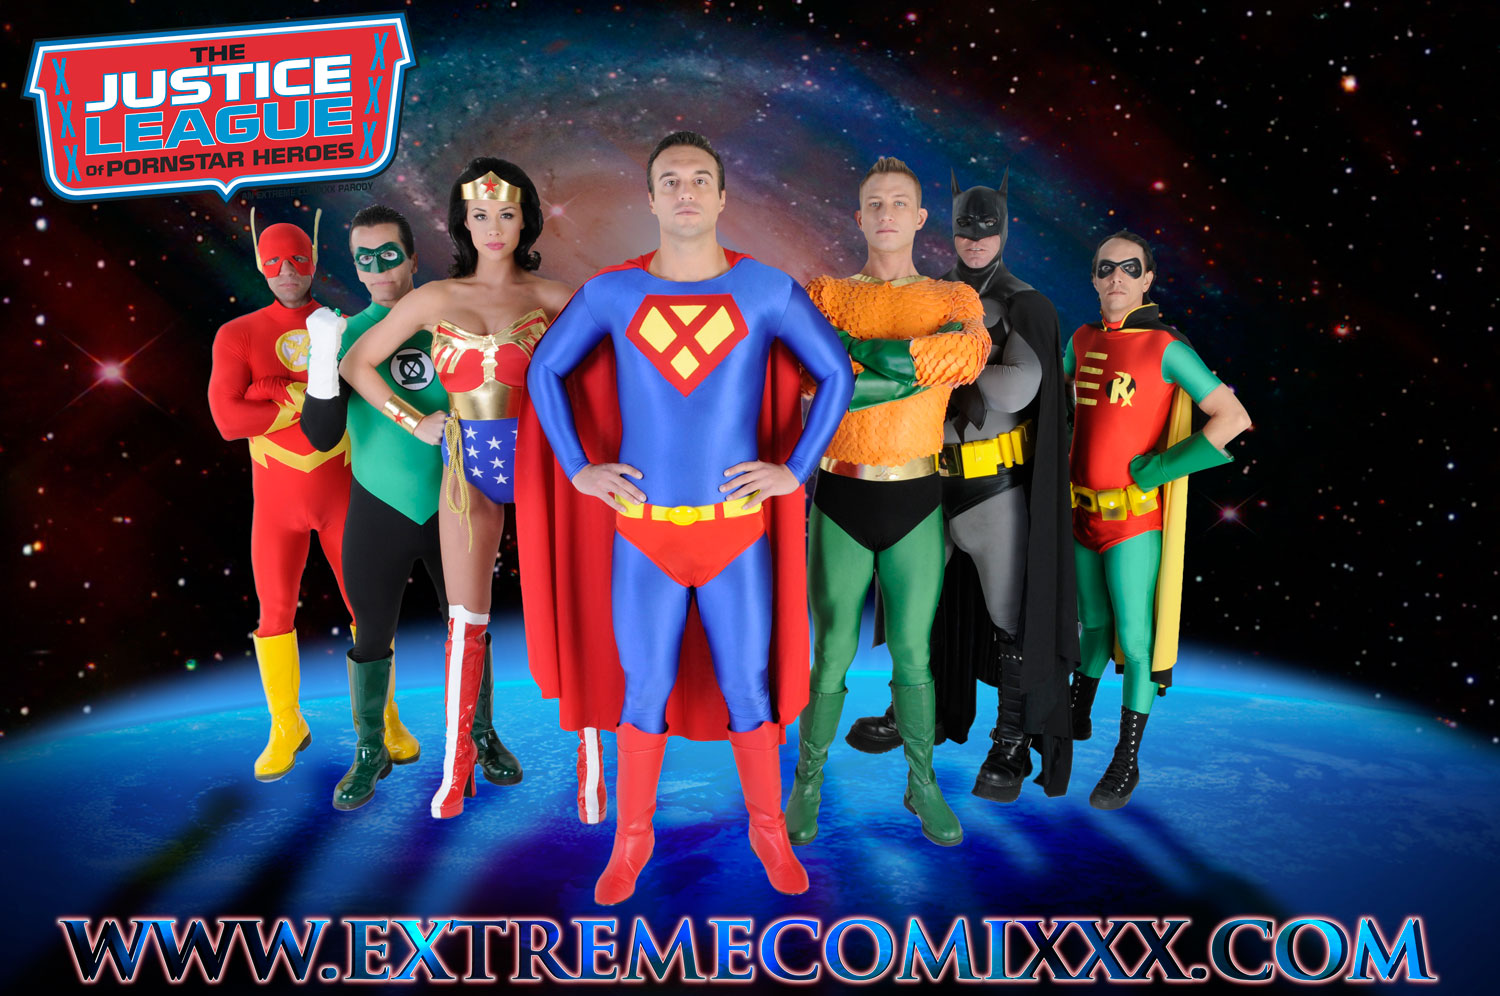 ADULT VIDEO The Justice League XXX An Extreme Comixxx Parody